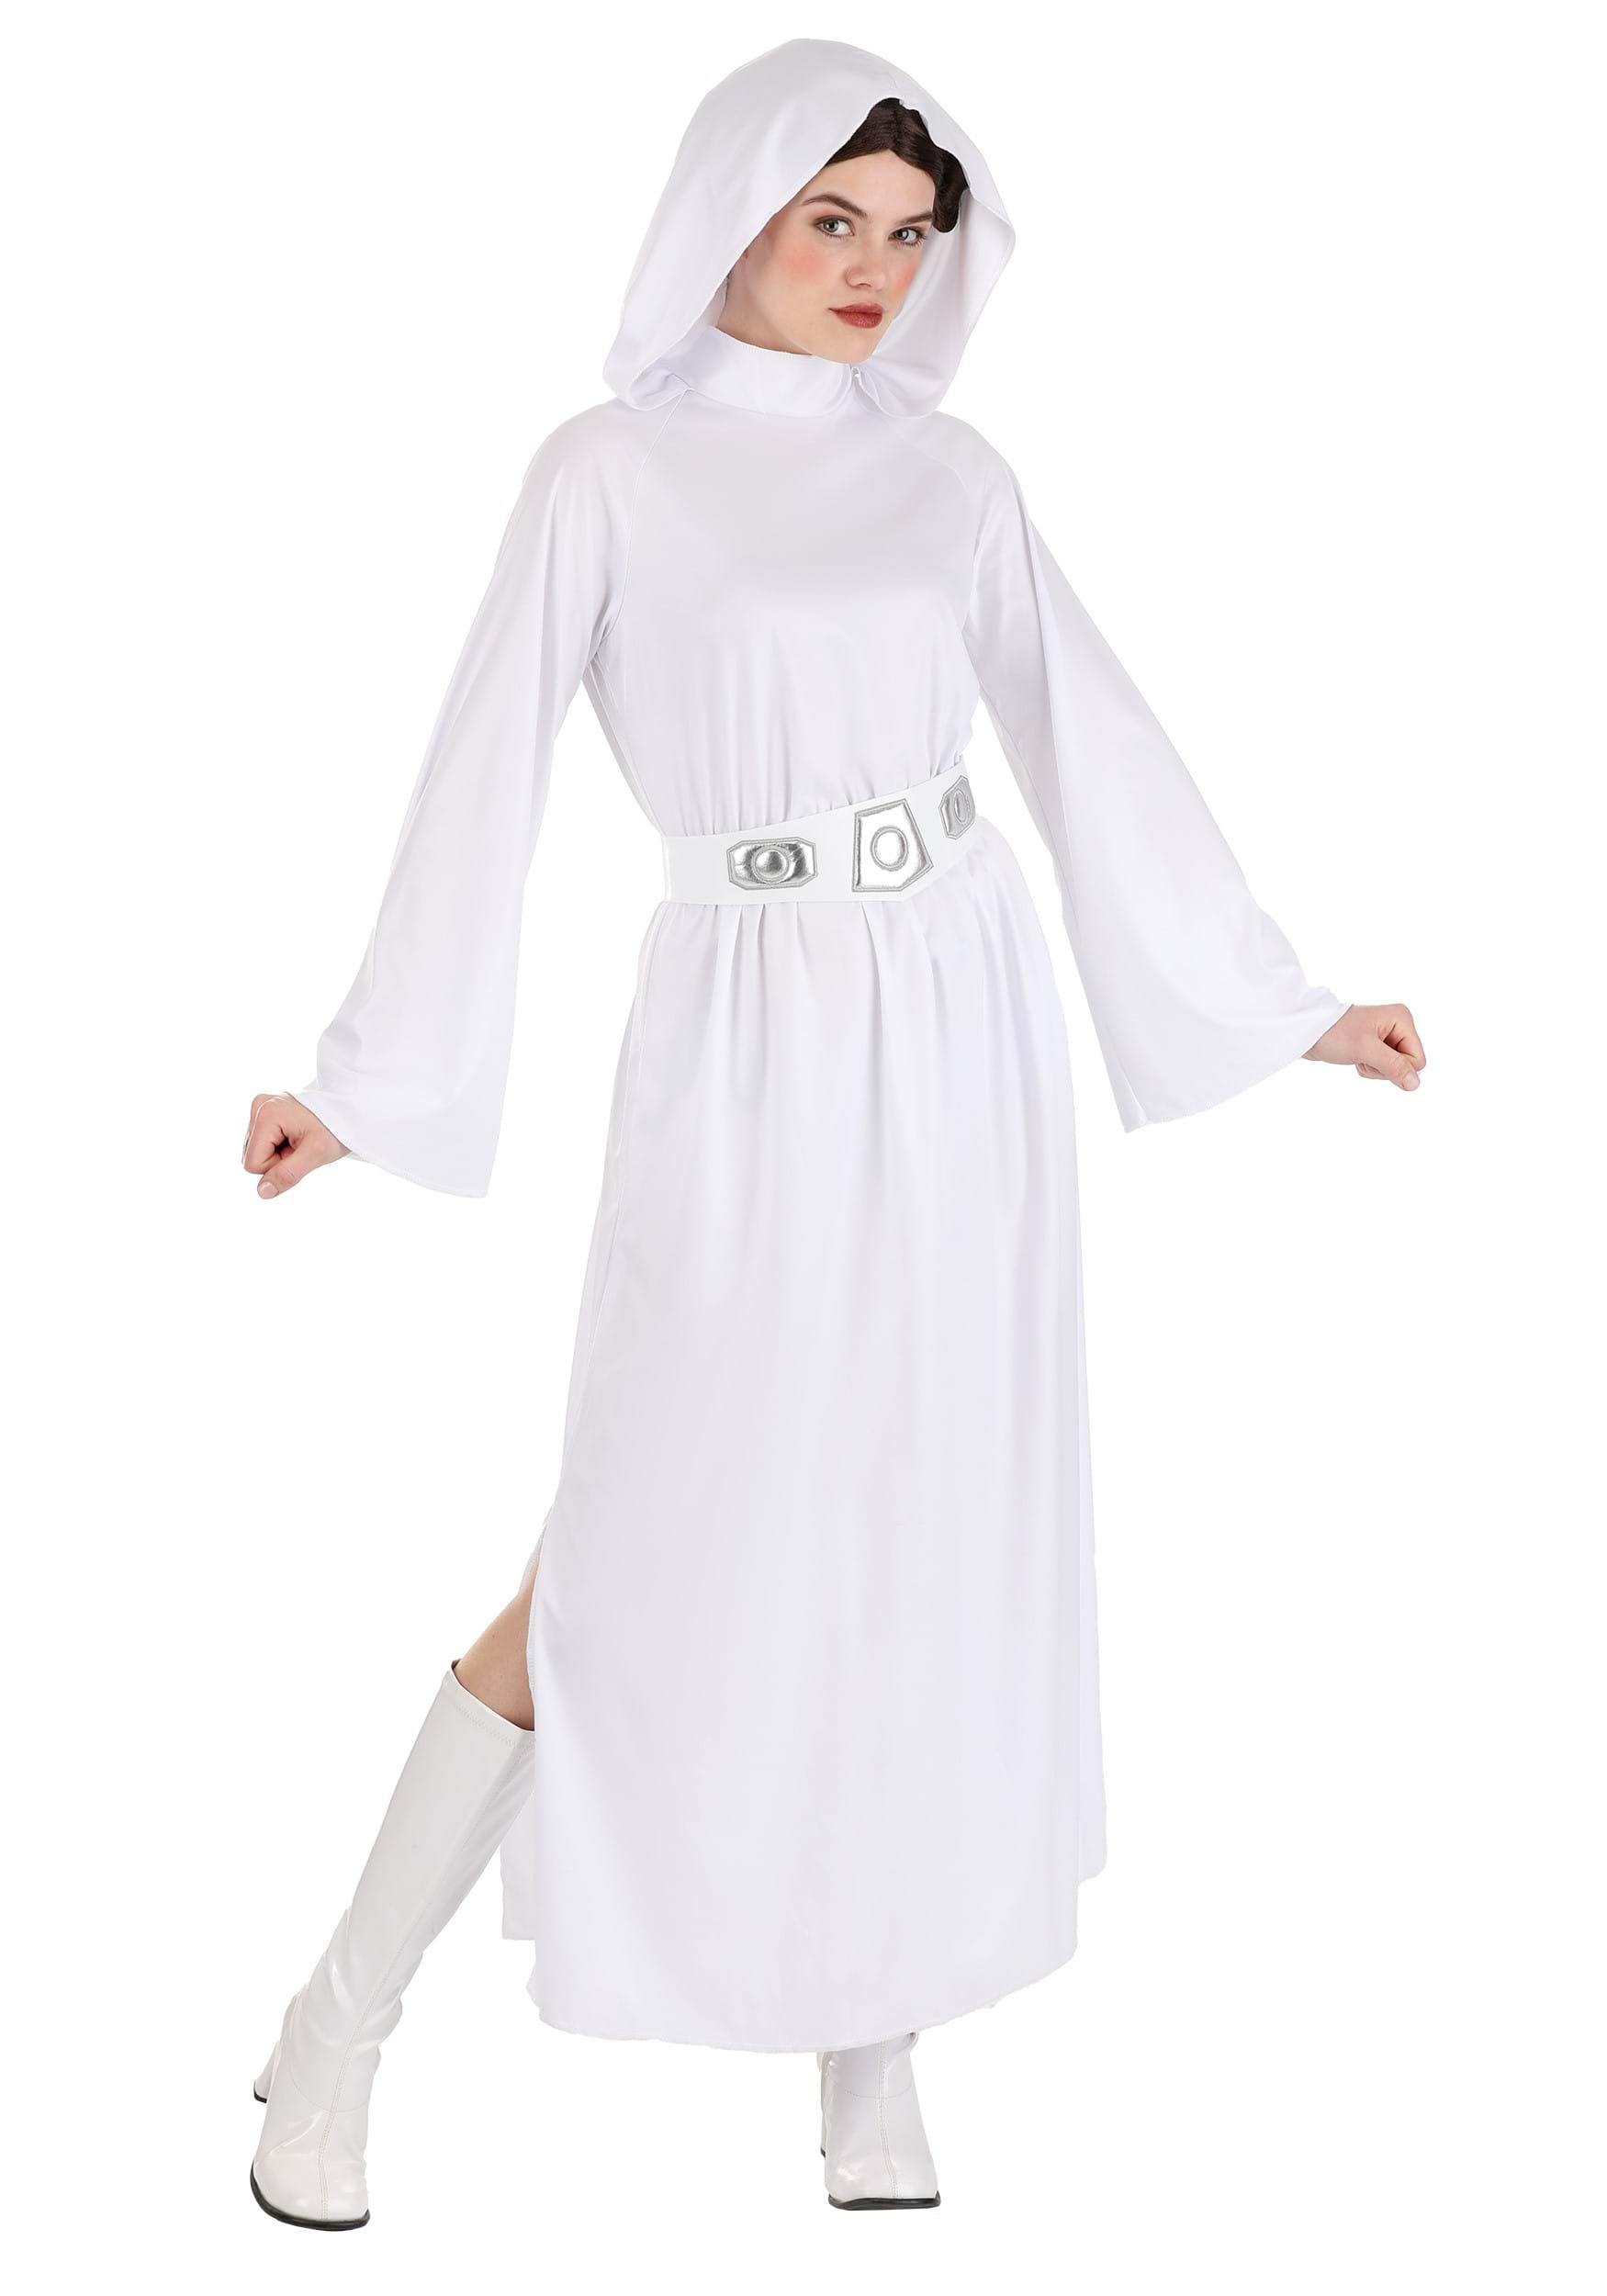 Image of Jazwares Princess Leia Hooded Costume for Adults